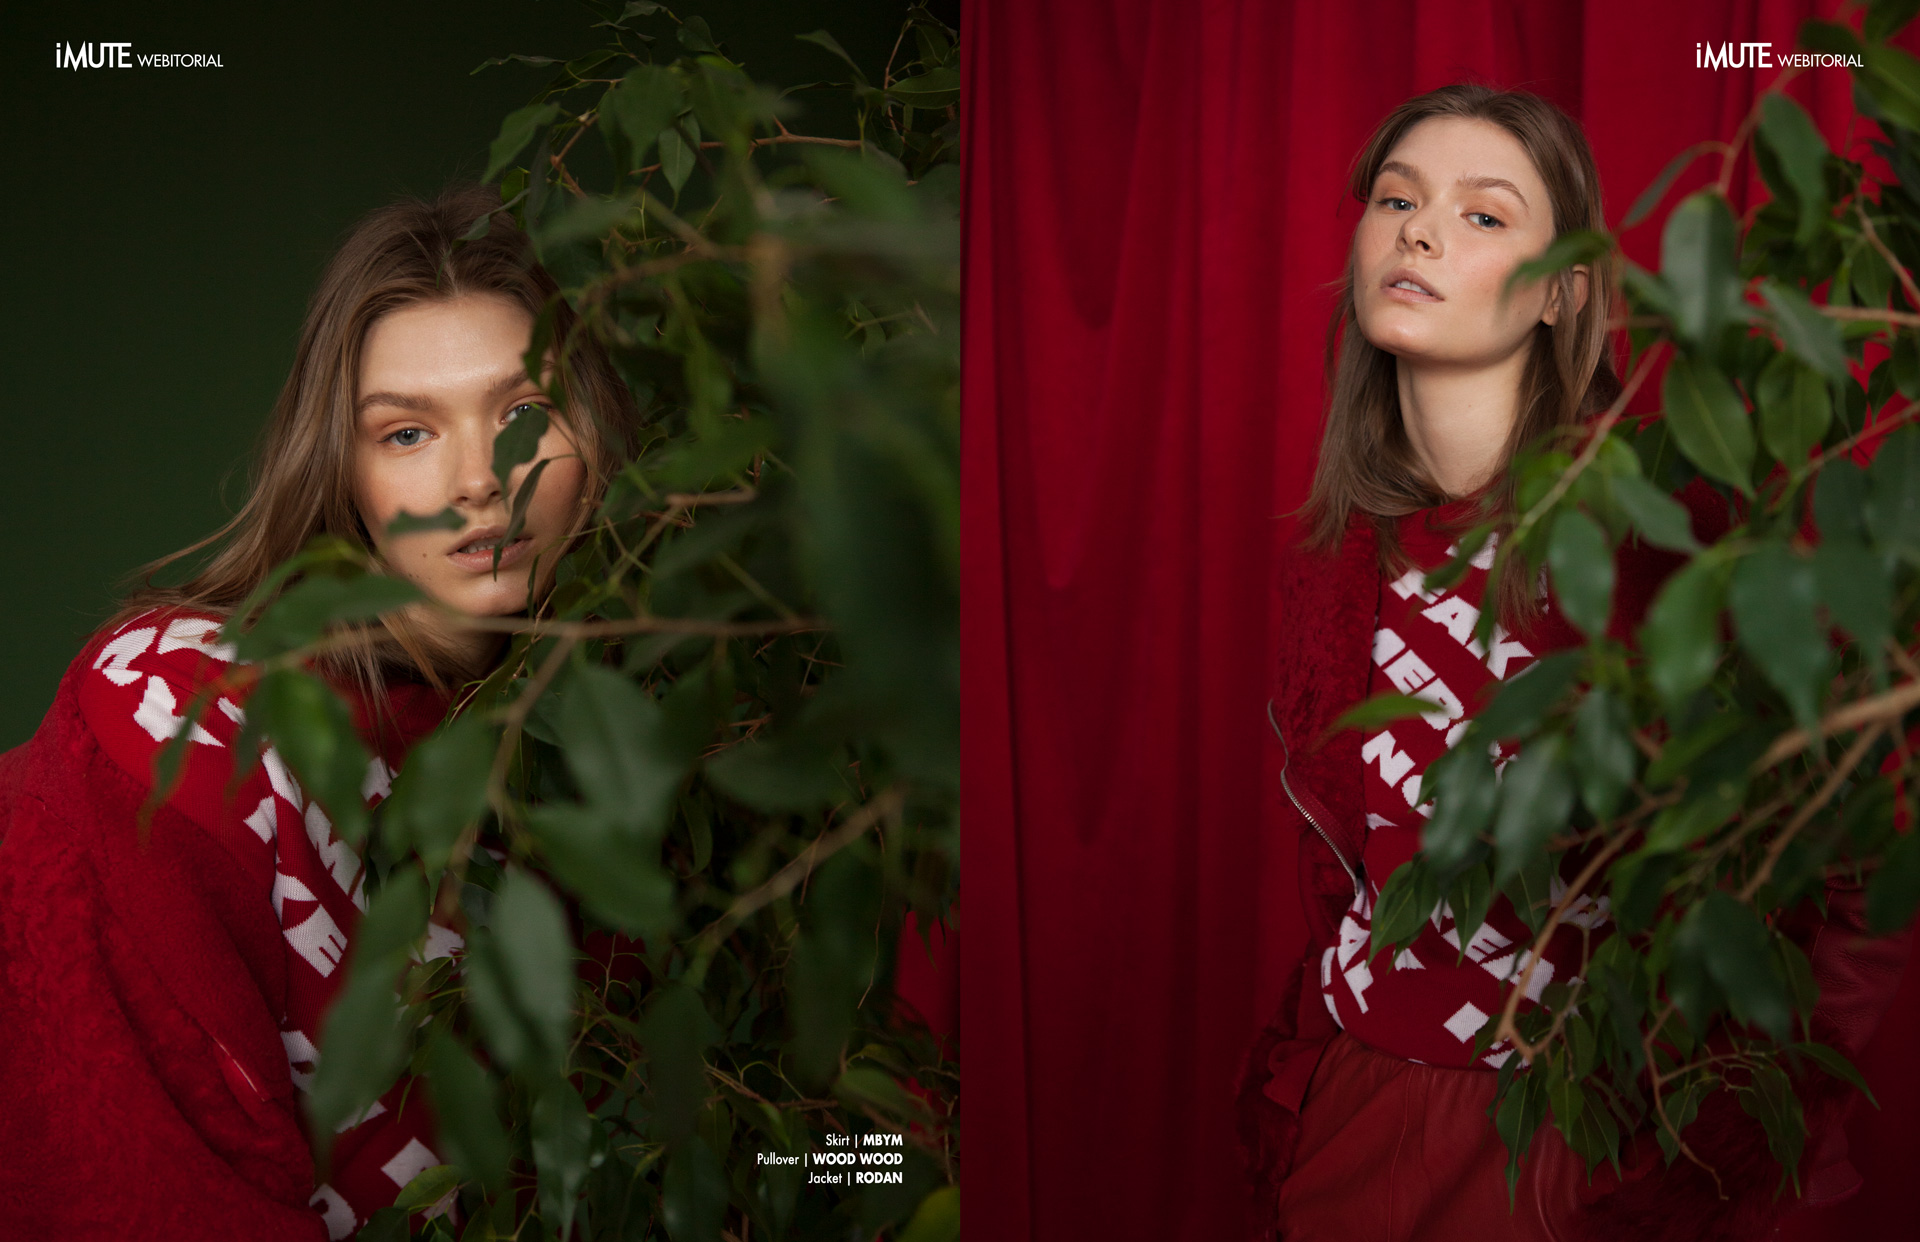 Natur_al webitorial for iMute Magazine Photographer | Jessica Grossmann Model | Anna GoleBiowska @ TFM Models Stylist | Carmen Wolfschluckner Makeup & Hair | Lea Komminoth